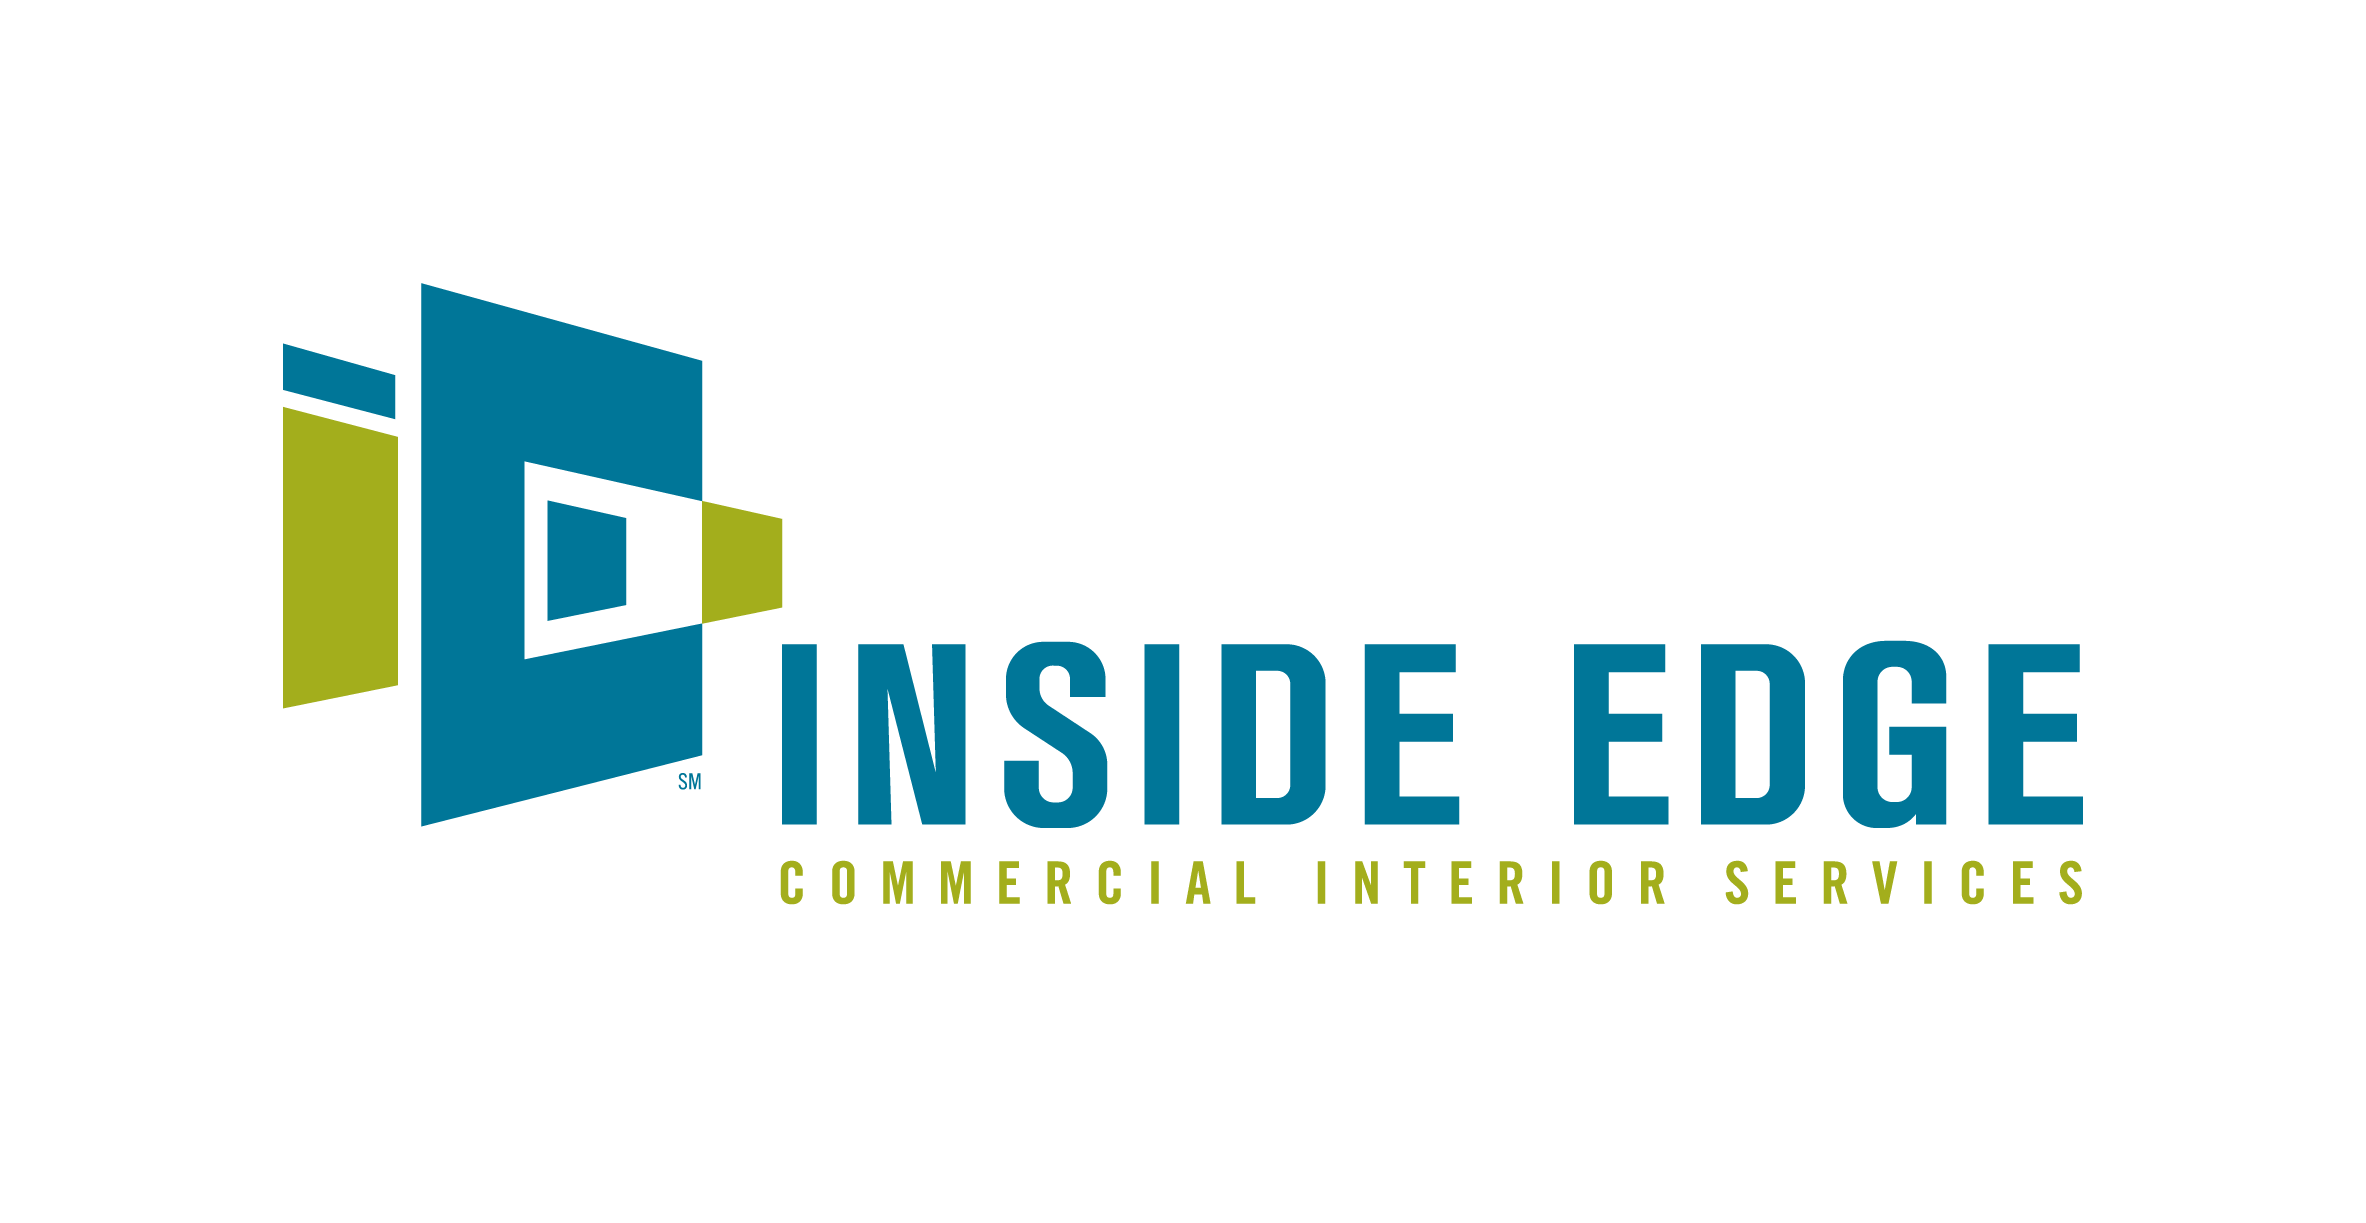 Inside Edge Commercial Interior Services logo